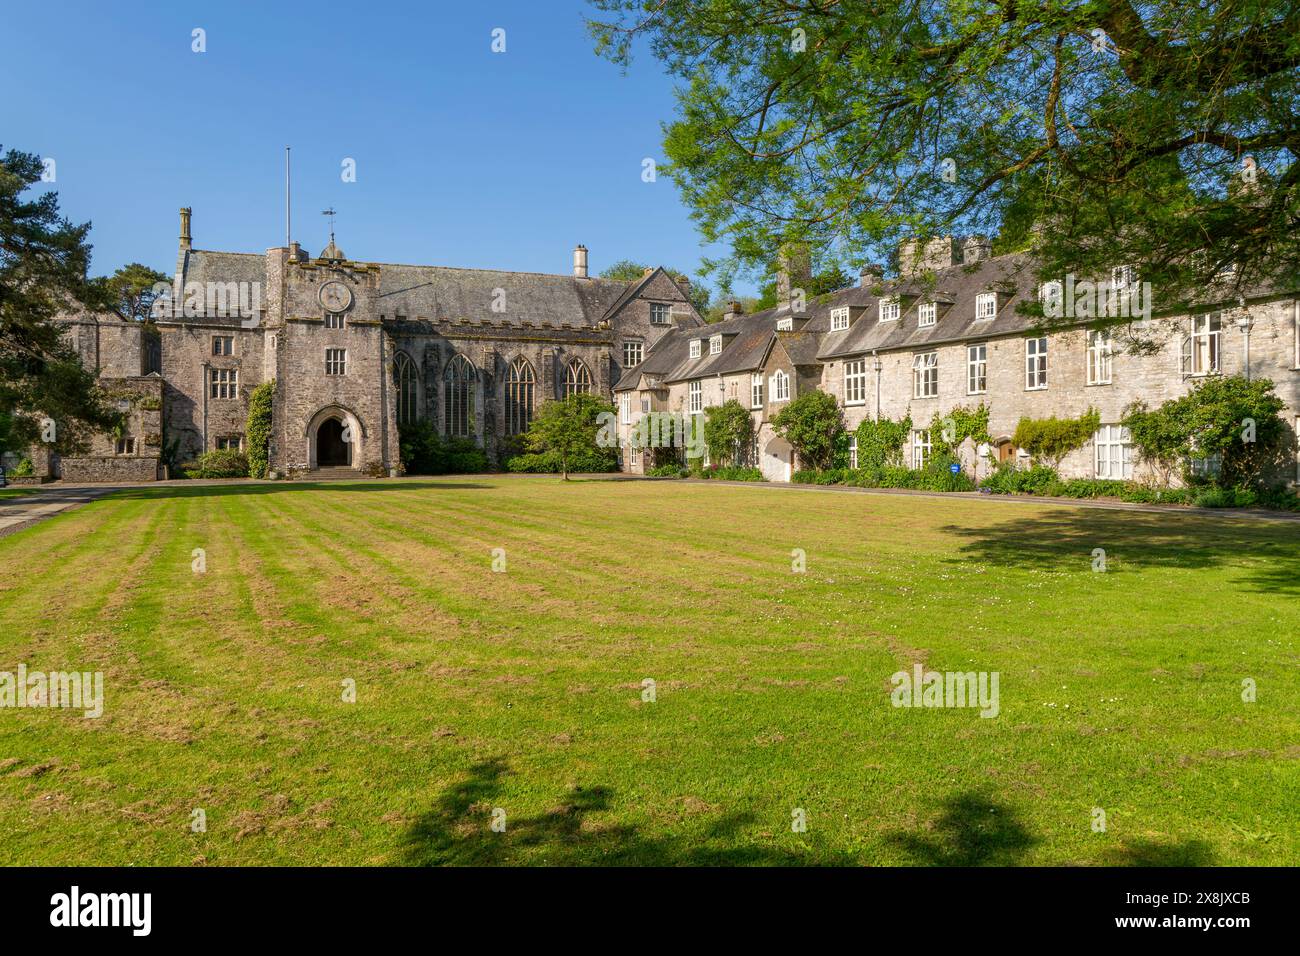 The Great Hall in courtyard of Dartington estate, Darlington, south Devon, England, UK Stock Photo